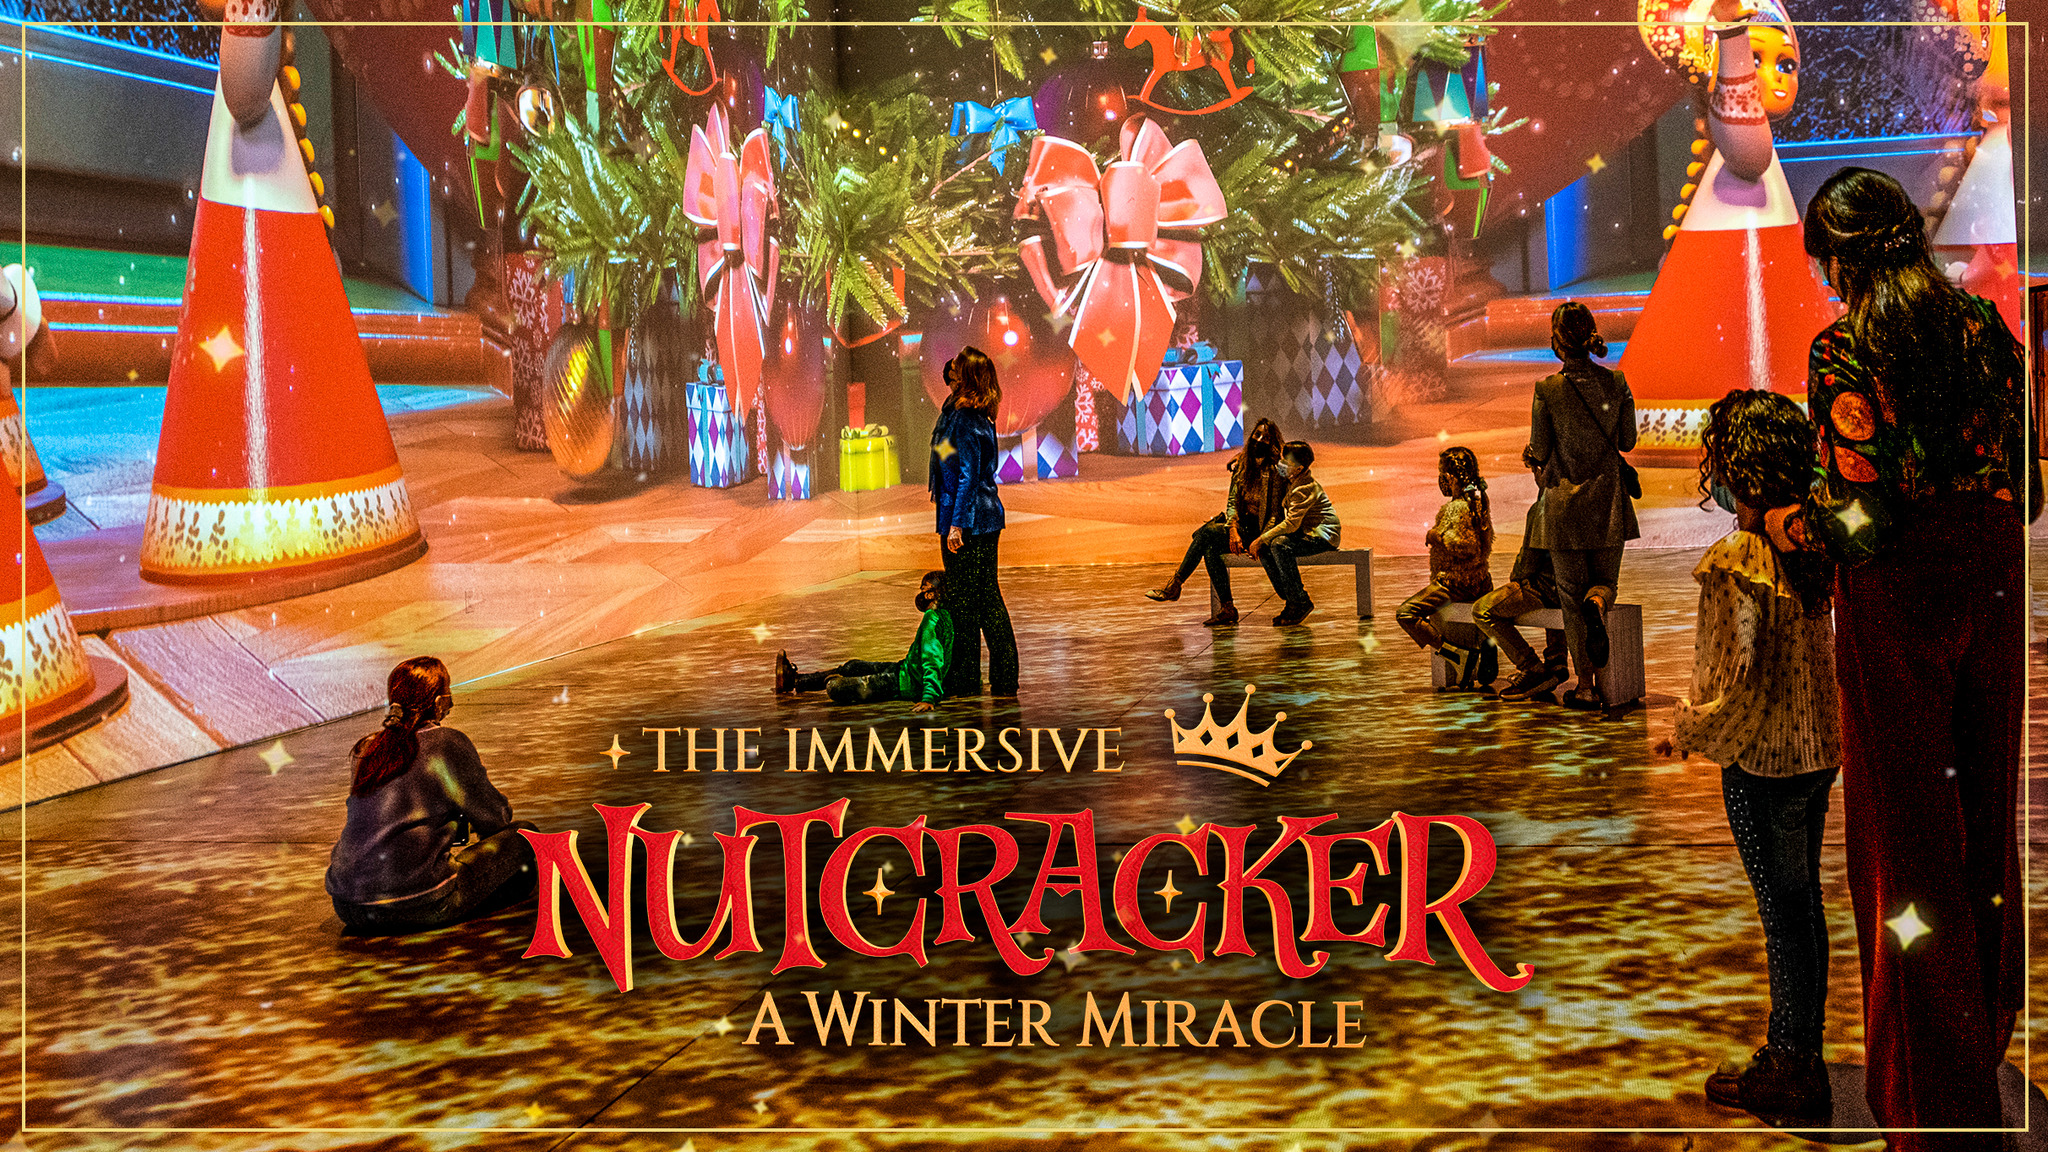 The Immersive Nutcracker Los Angeles Tickets Event Dates & Schedule